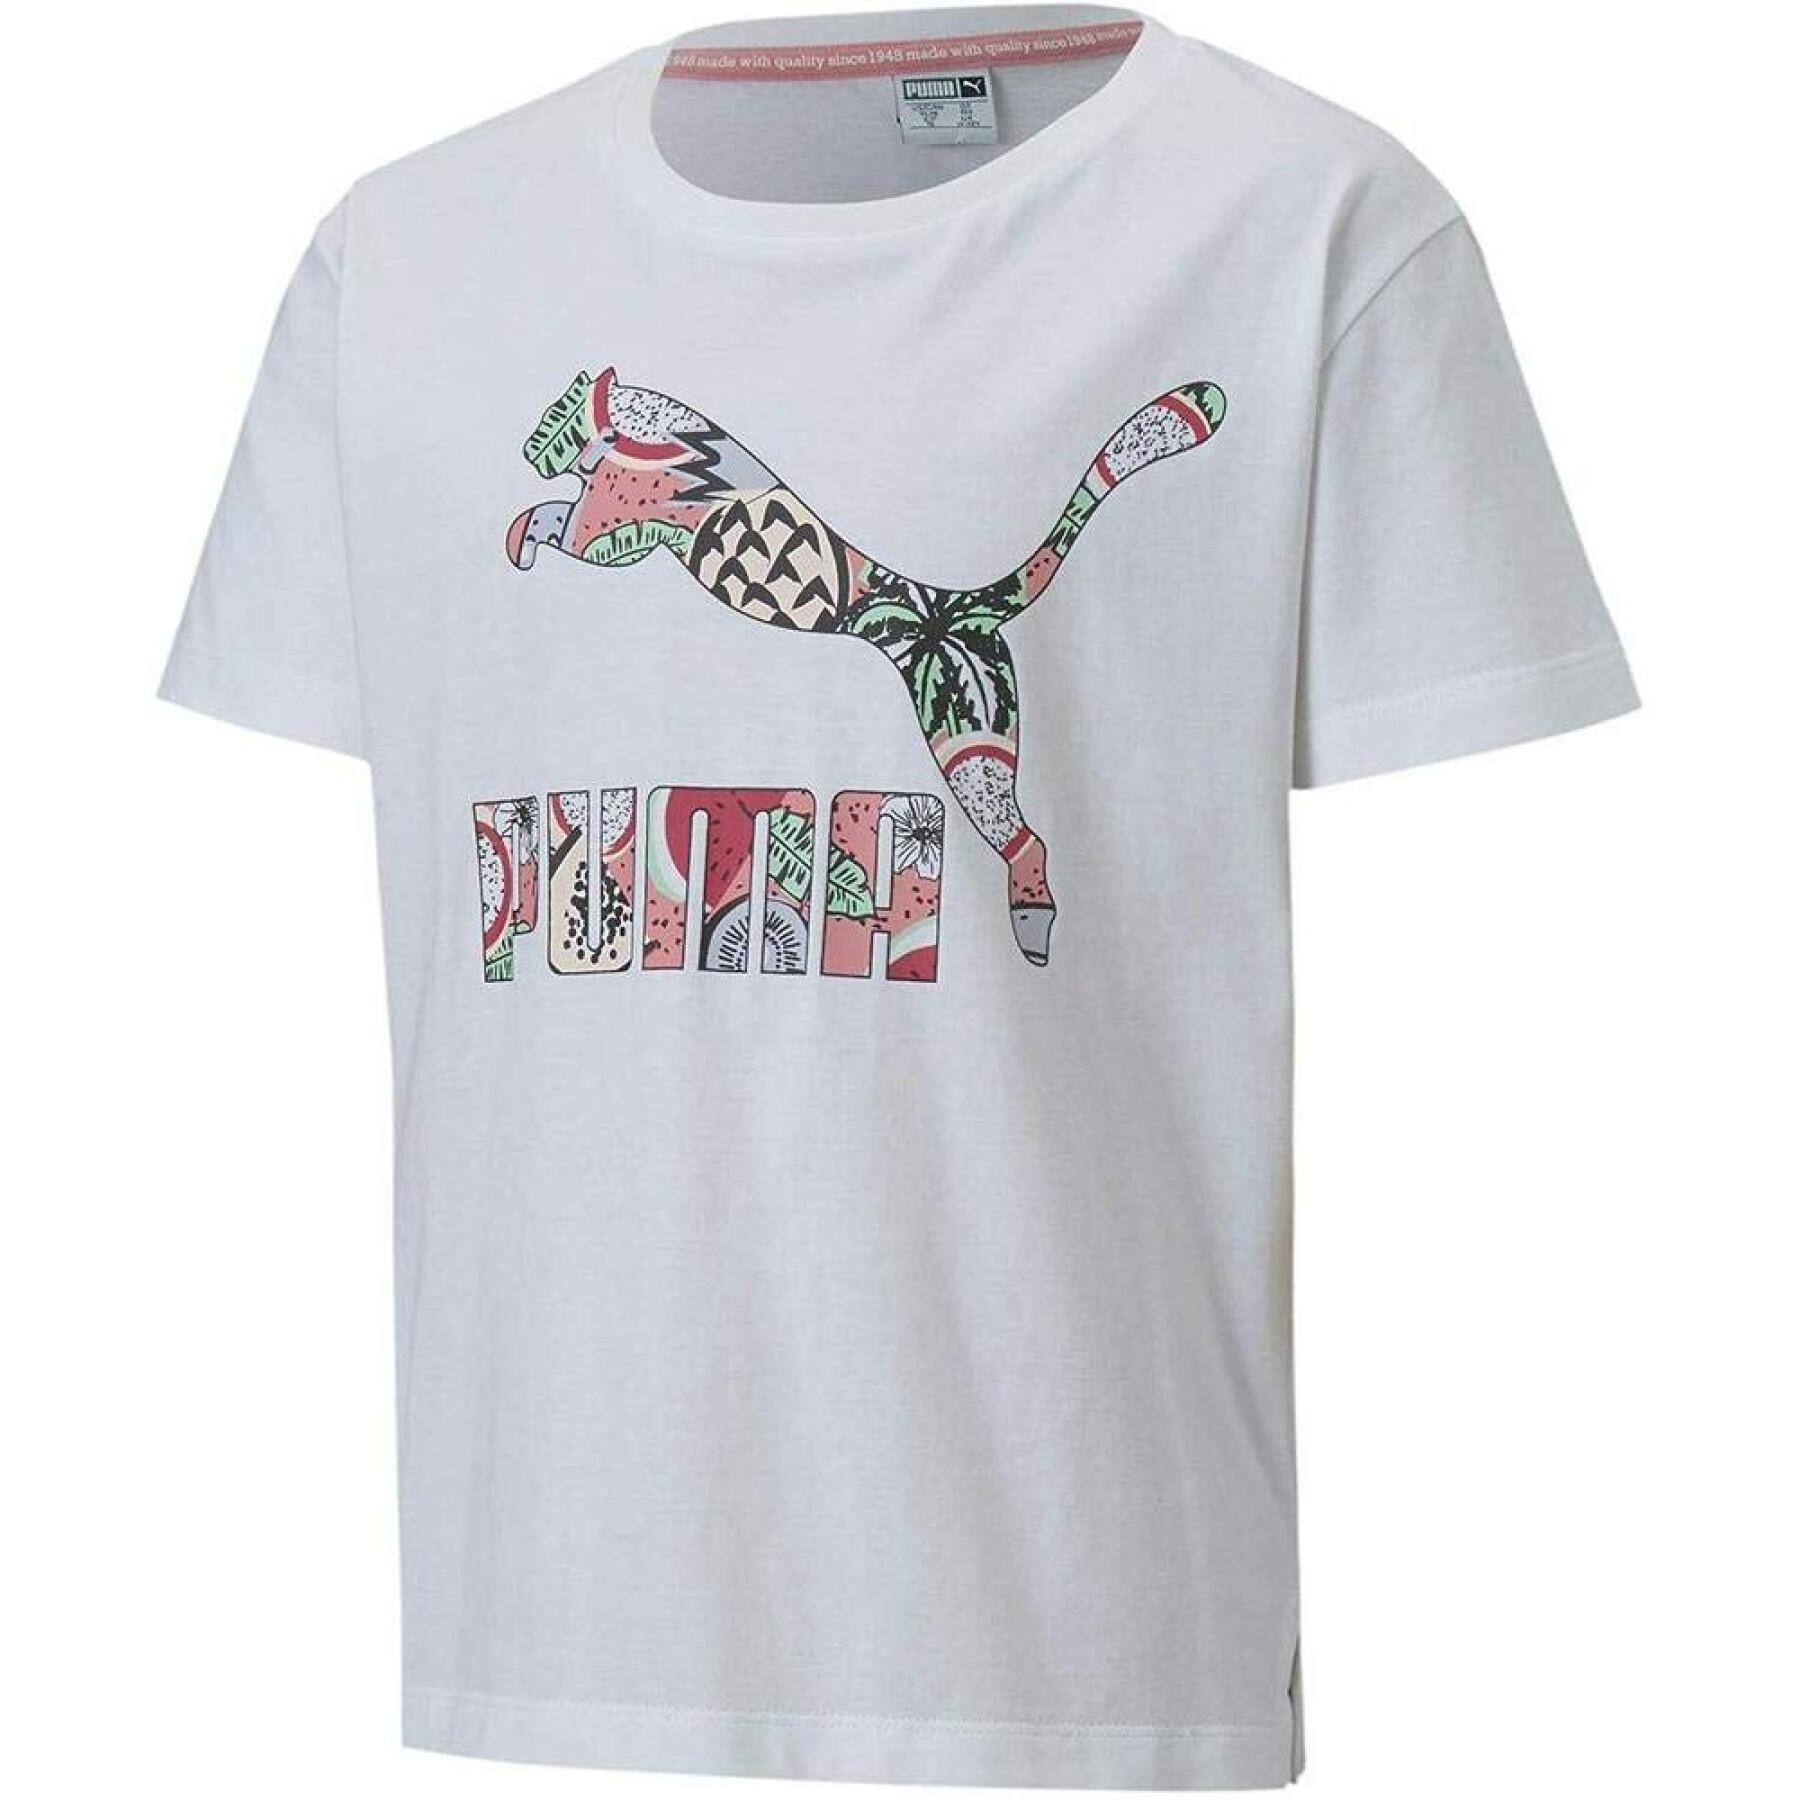 Kinder-T-Shirt Puma Graphic classic